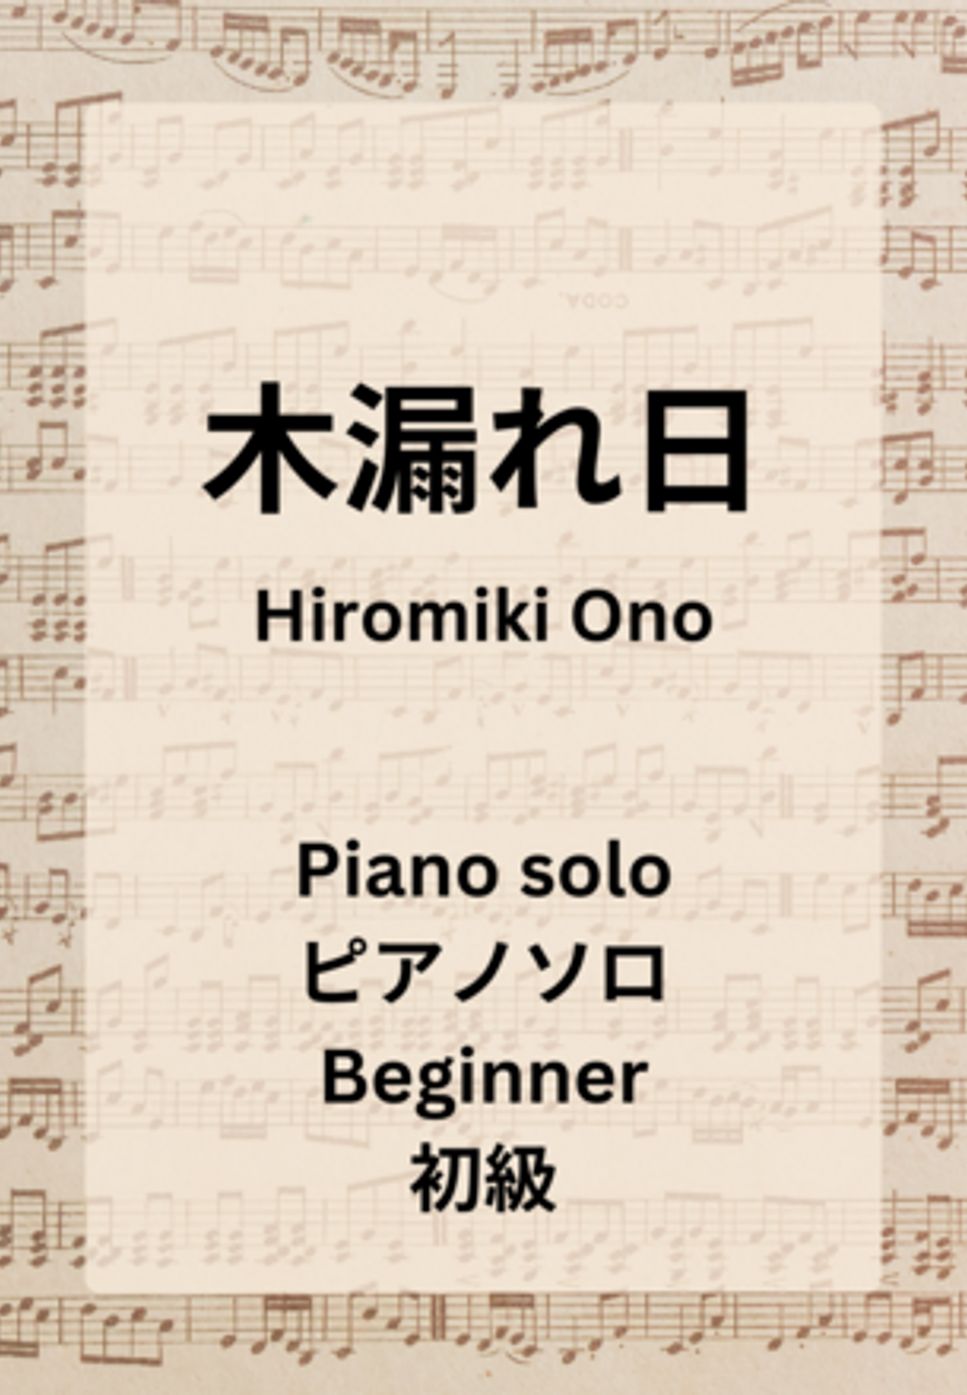 Hiromiki Ono - 木漏れ日 (ピアノソロ オリジナル曲) by Hiromiki Ono